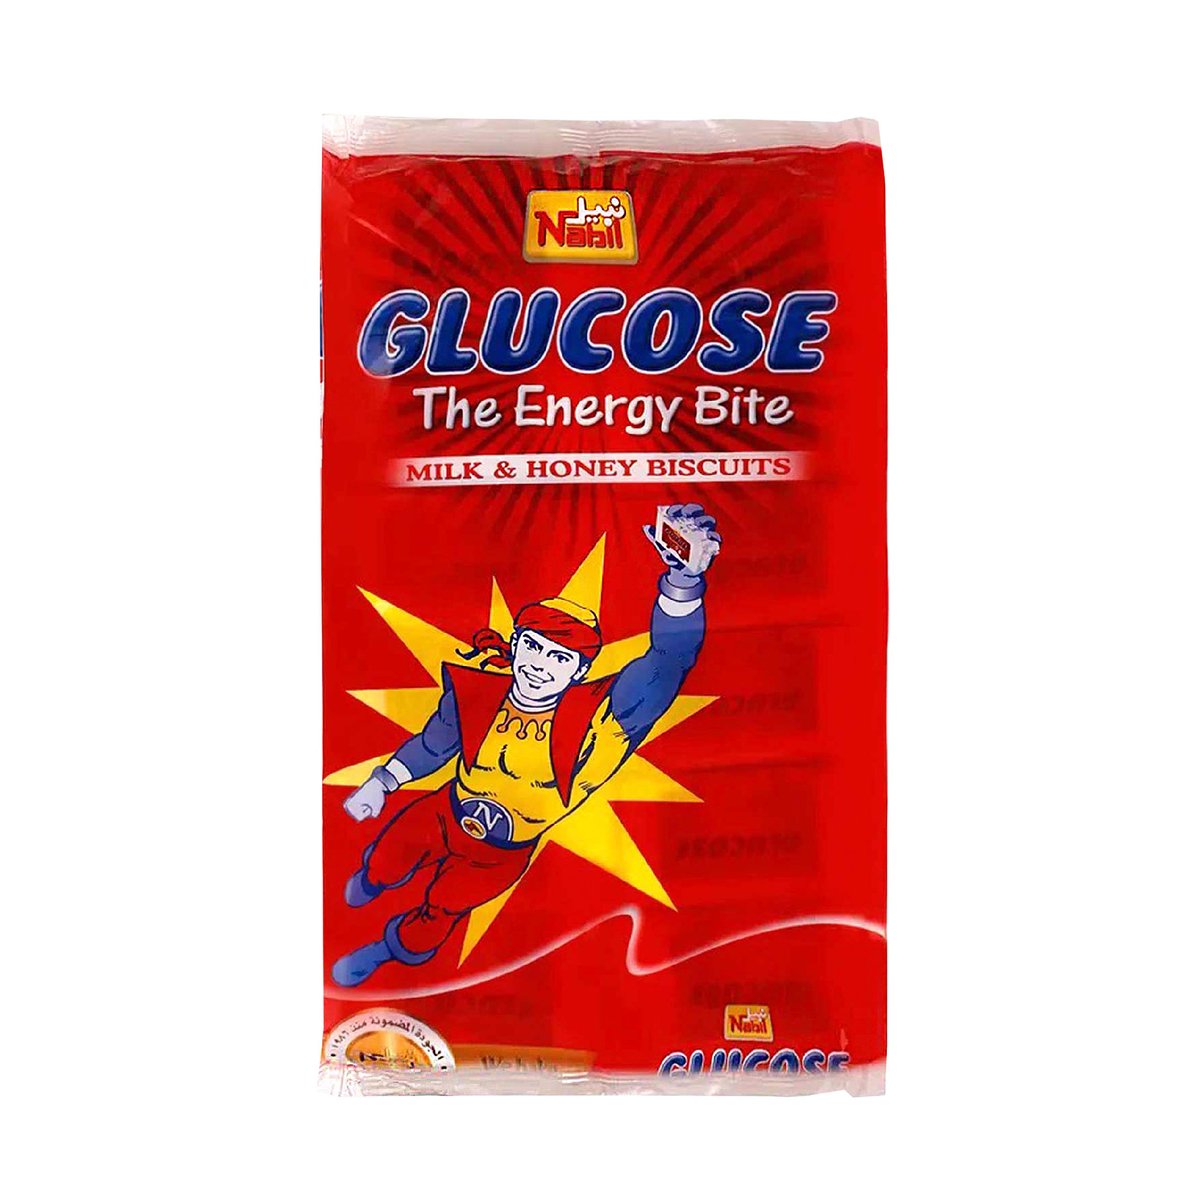 Nabil Glucose The Energy Bite Milk & Honey Biscuit Value Pack 20 x 40 g